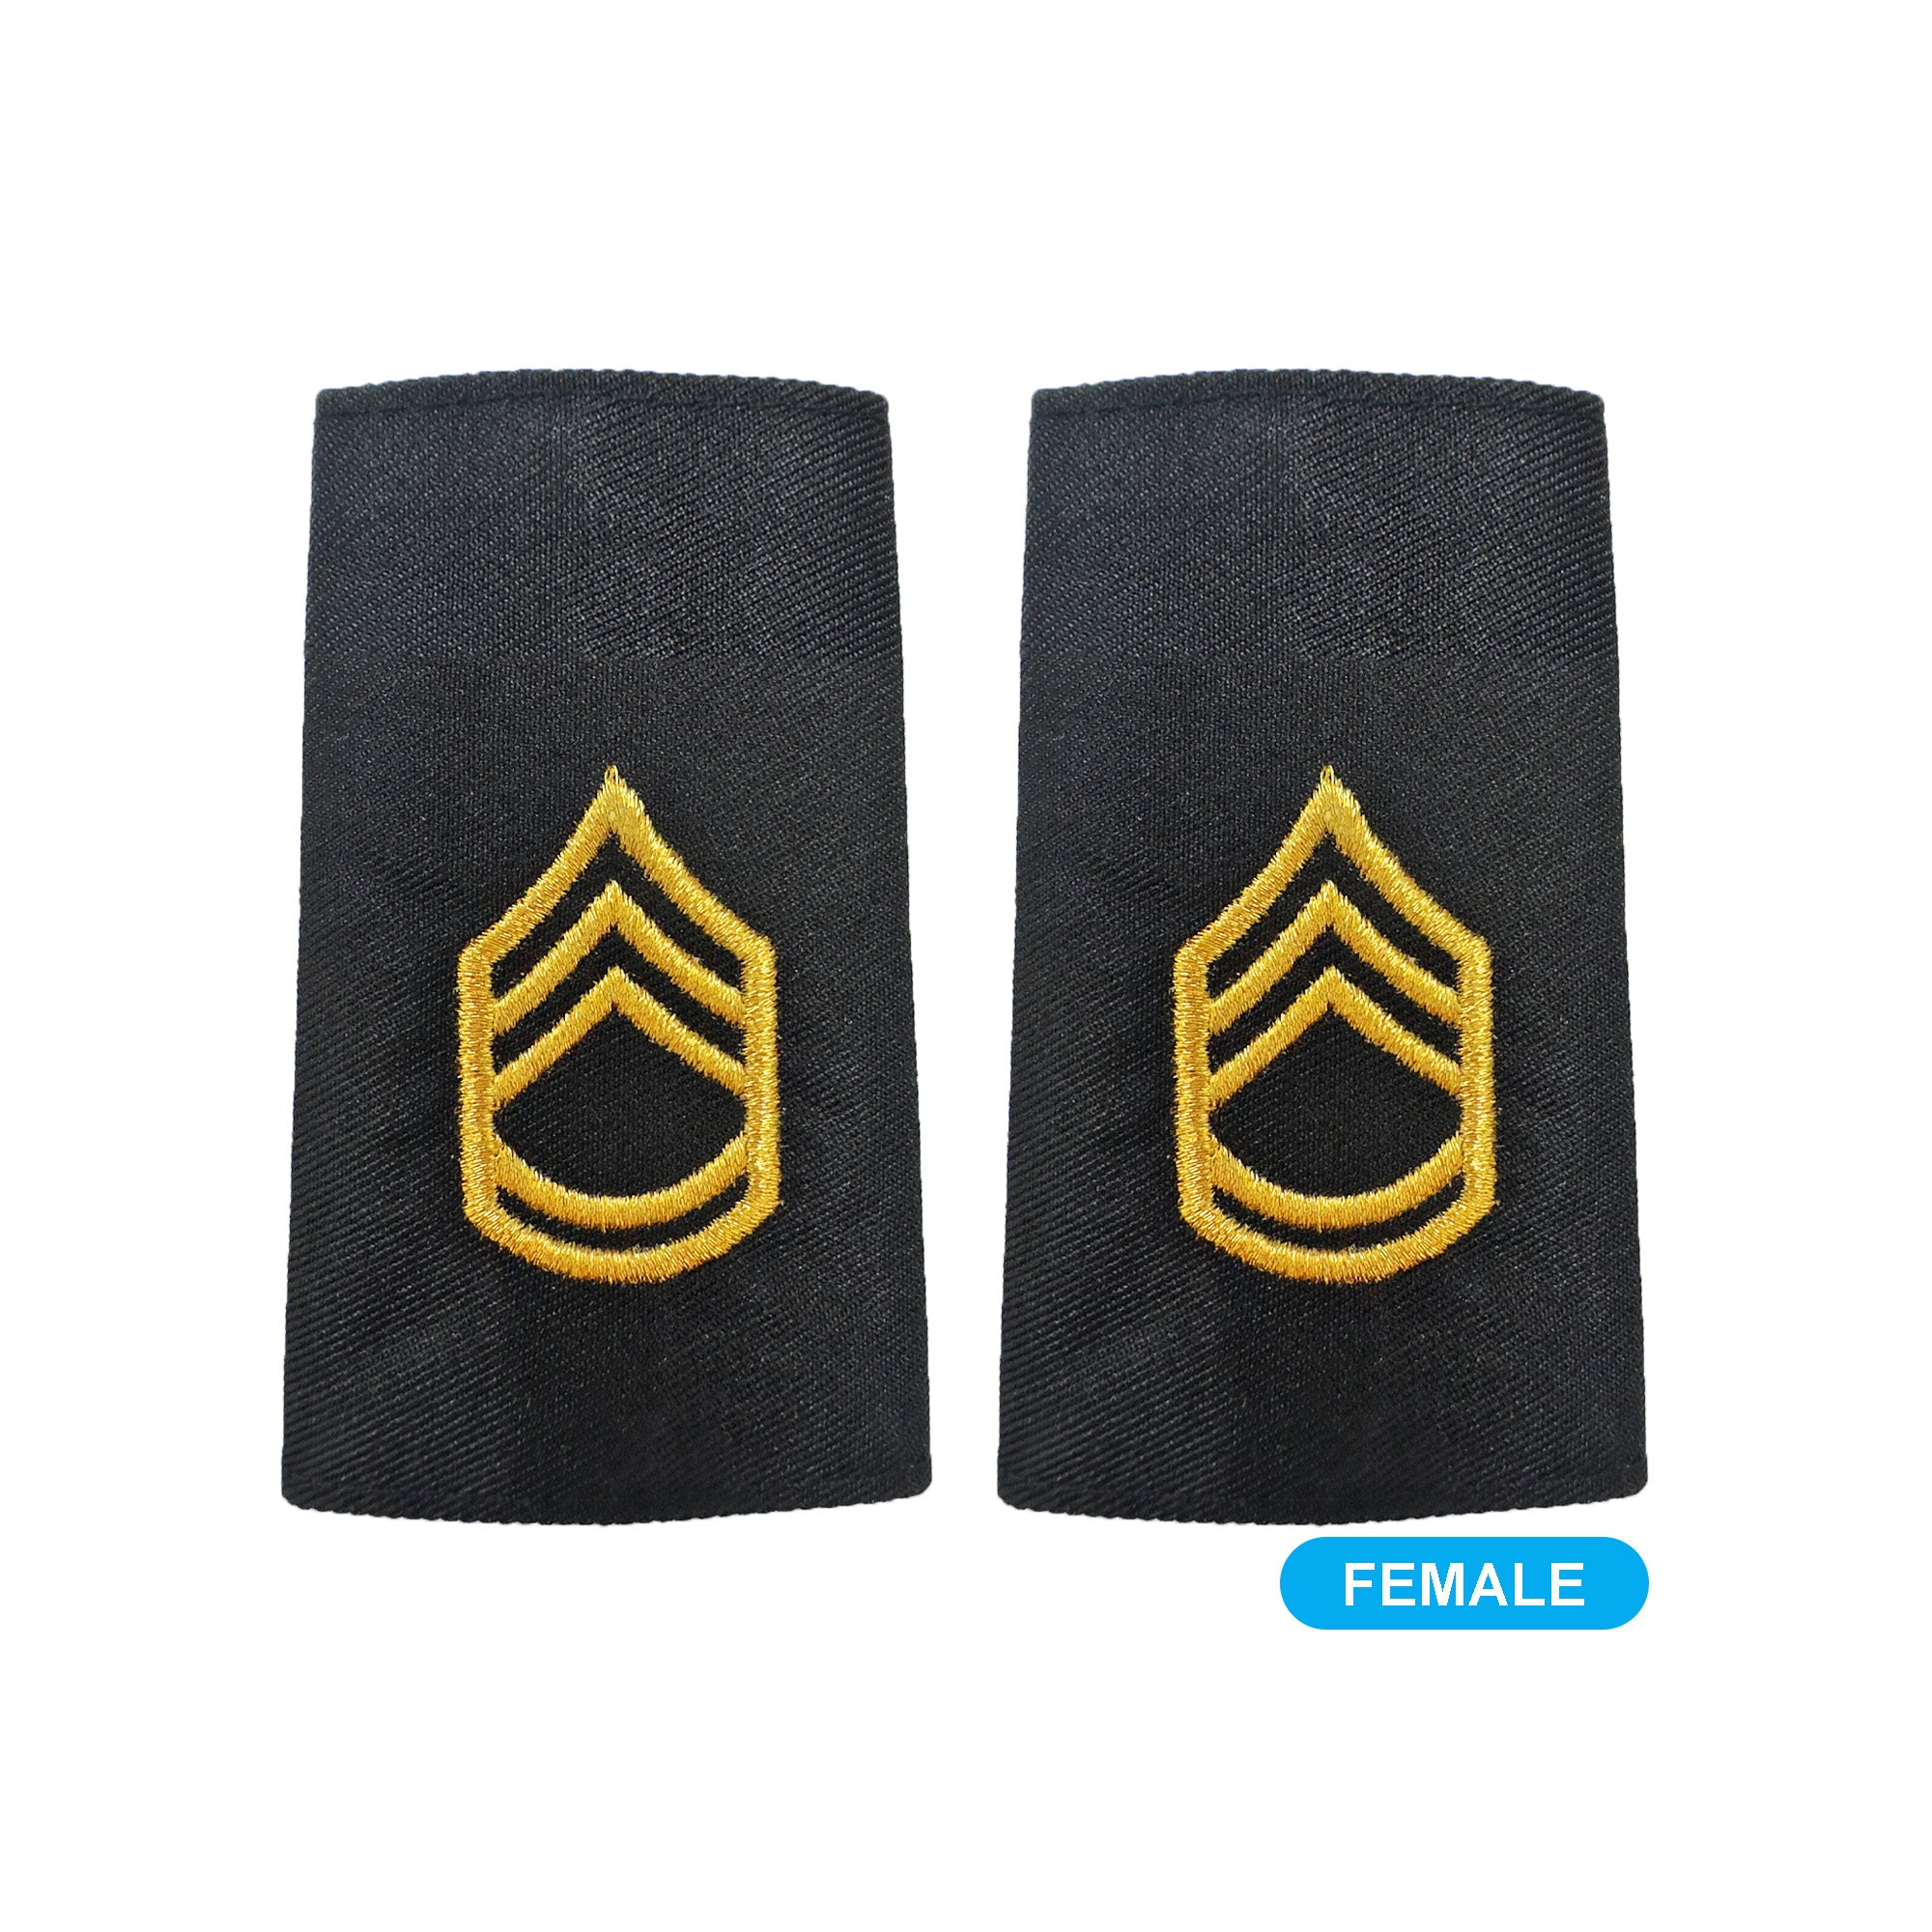 E7 Sergeant First Class Shoulder Marks - Small-Female - Insignia Depot